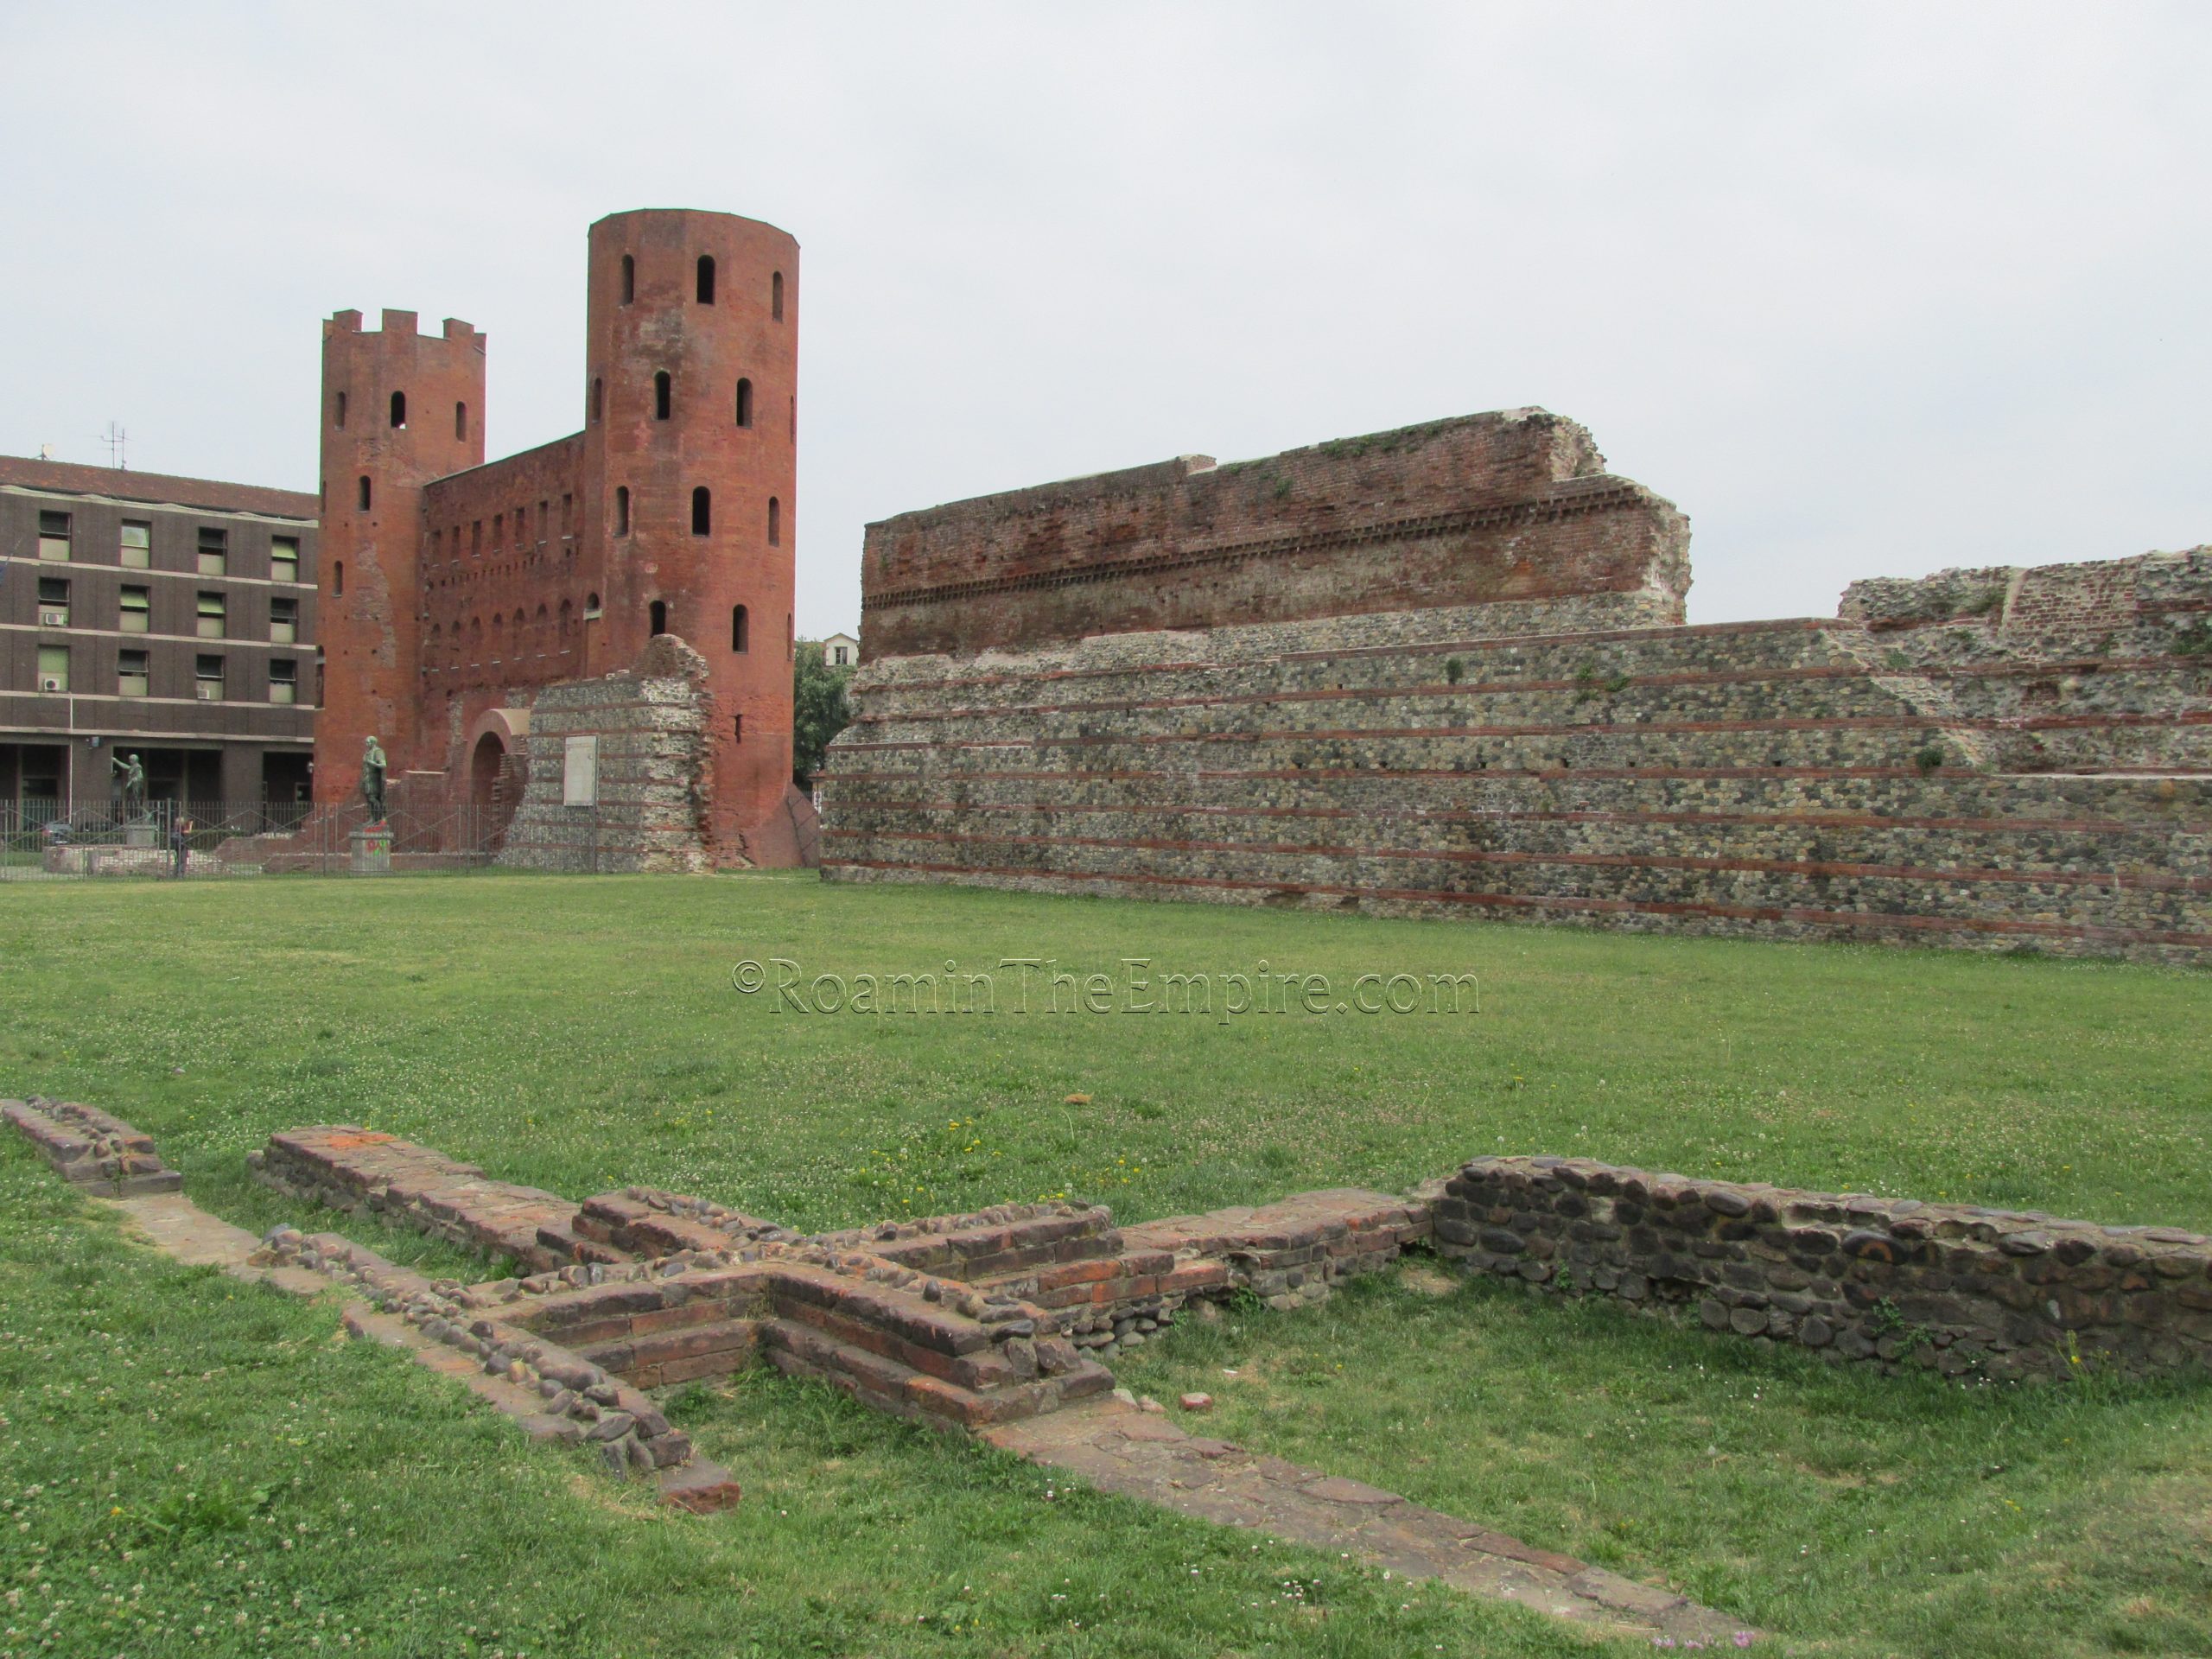 Remains in the Parco Archeologico Torri Palatina, along with the Porta Palatina and adjacent walls. Julia Augusta Taurinorum.